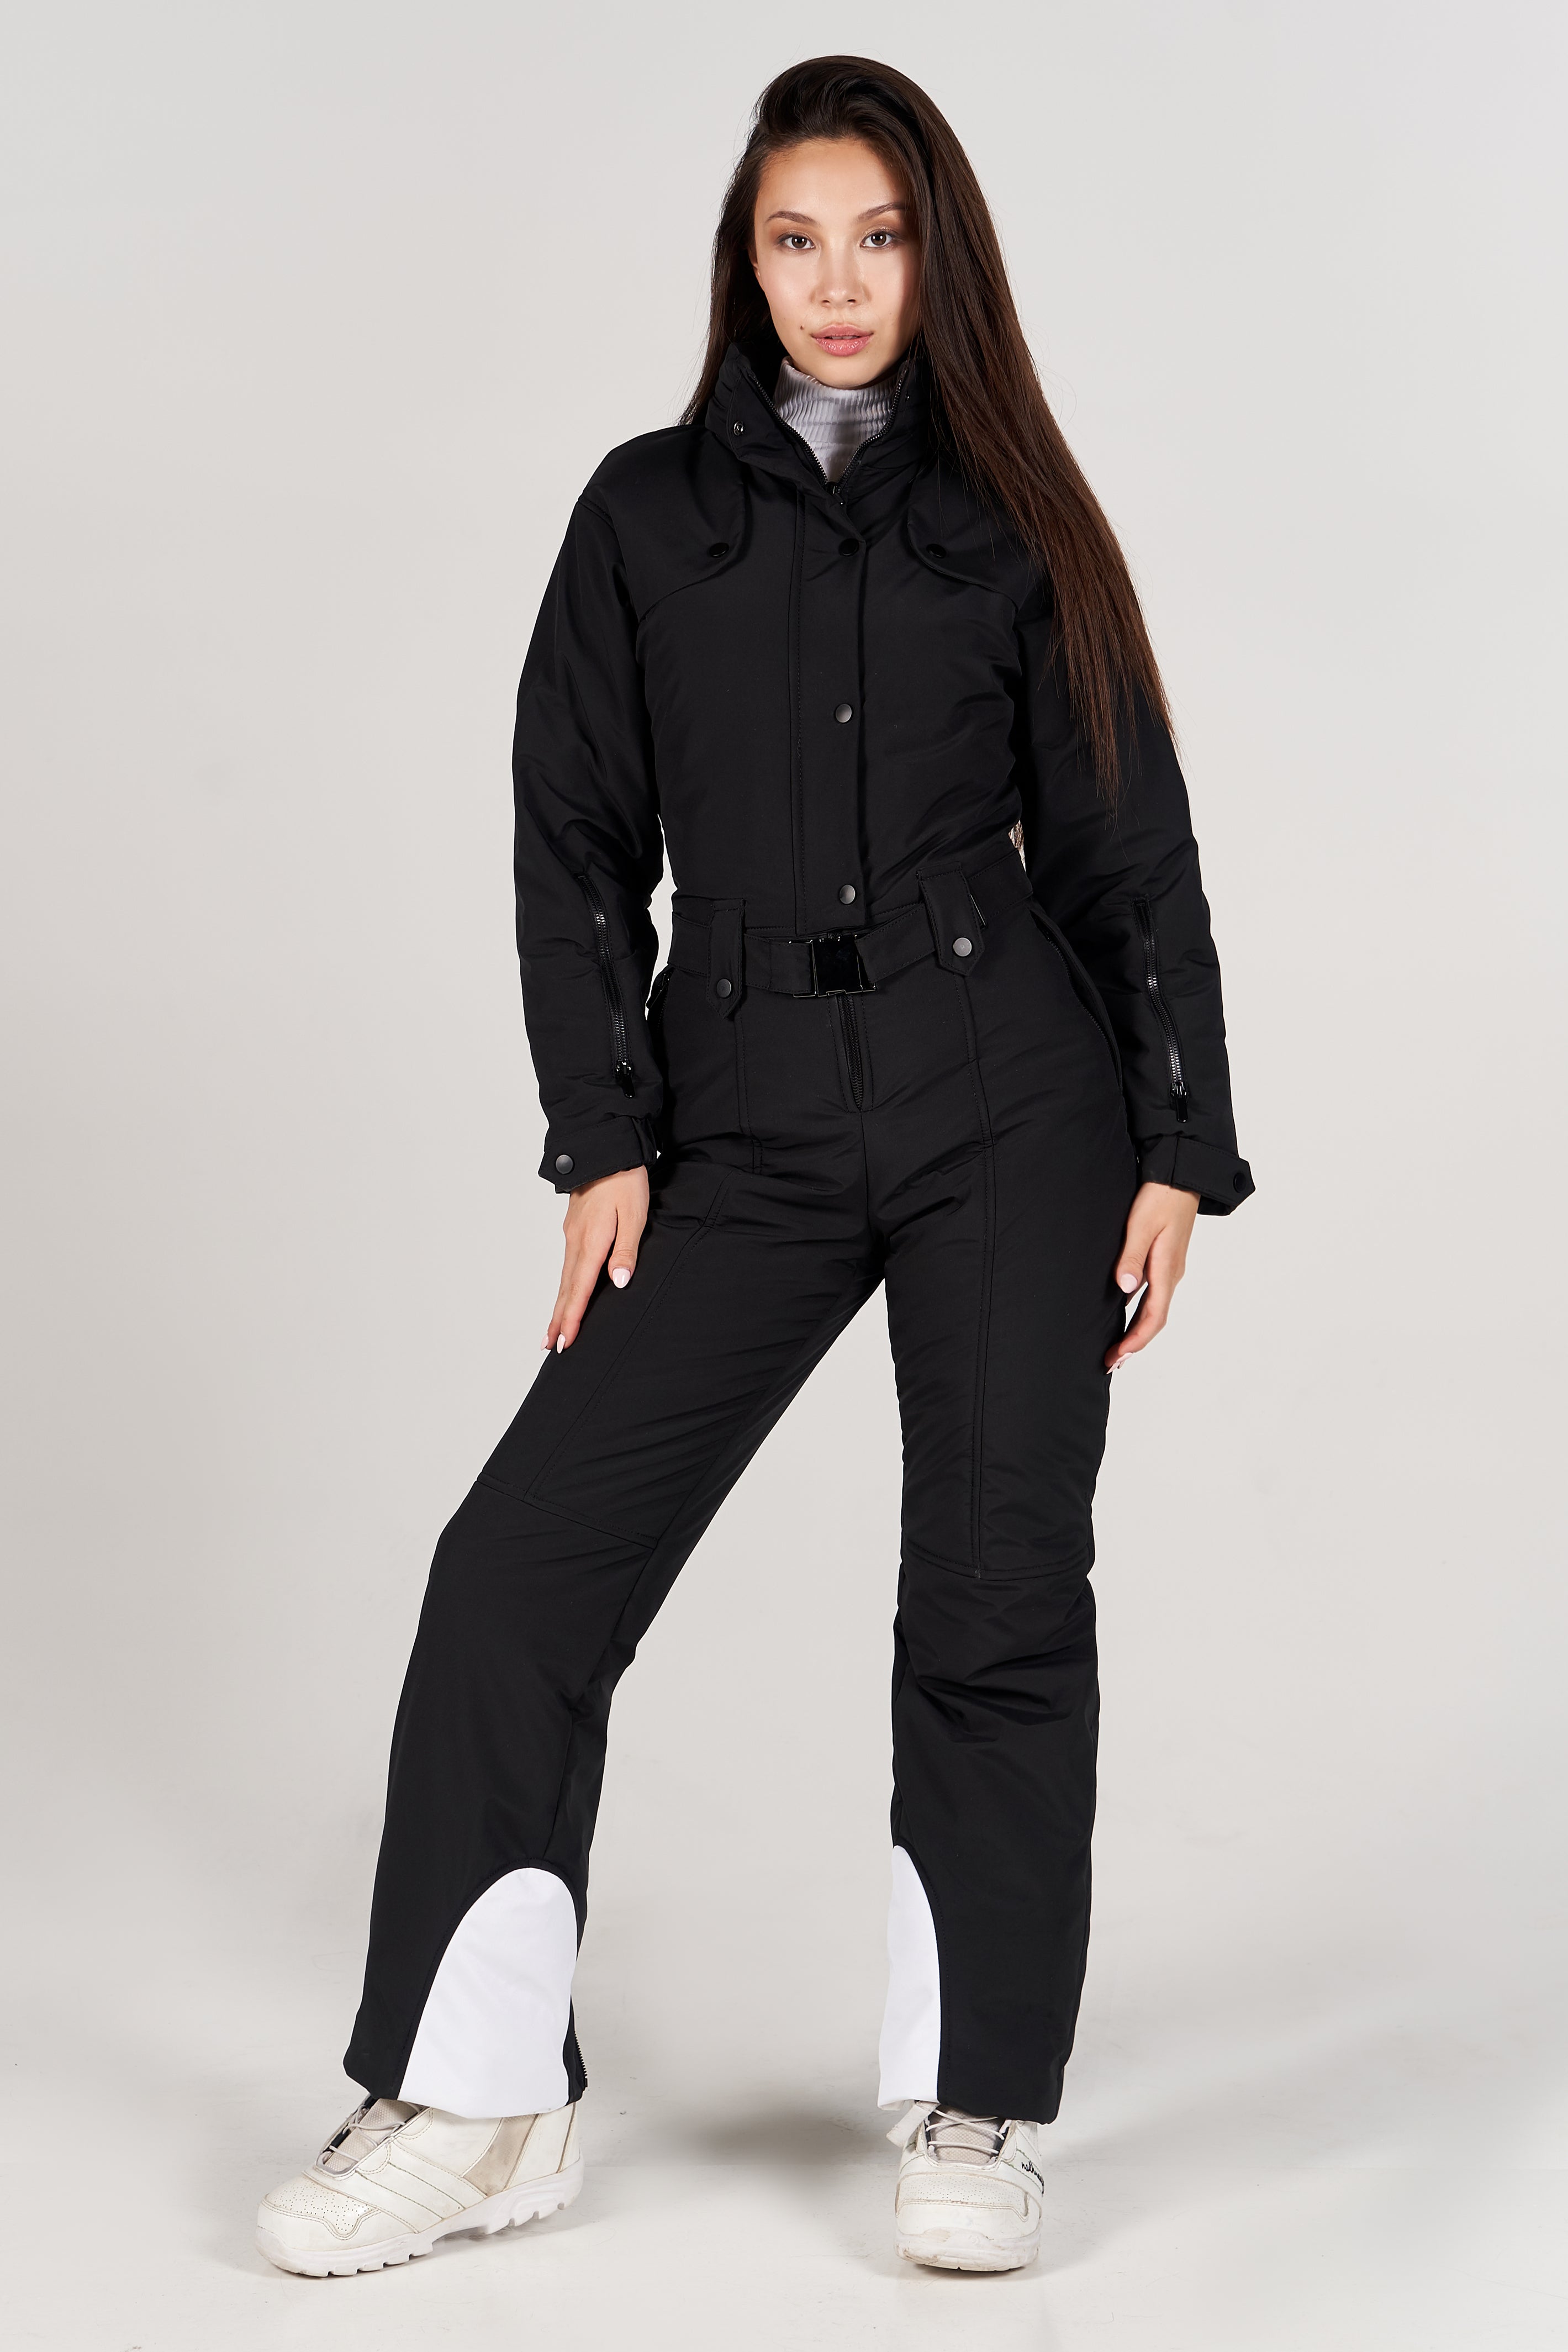 Black Ski Suit Women's RAINIER BLACK ORANGE Elements